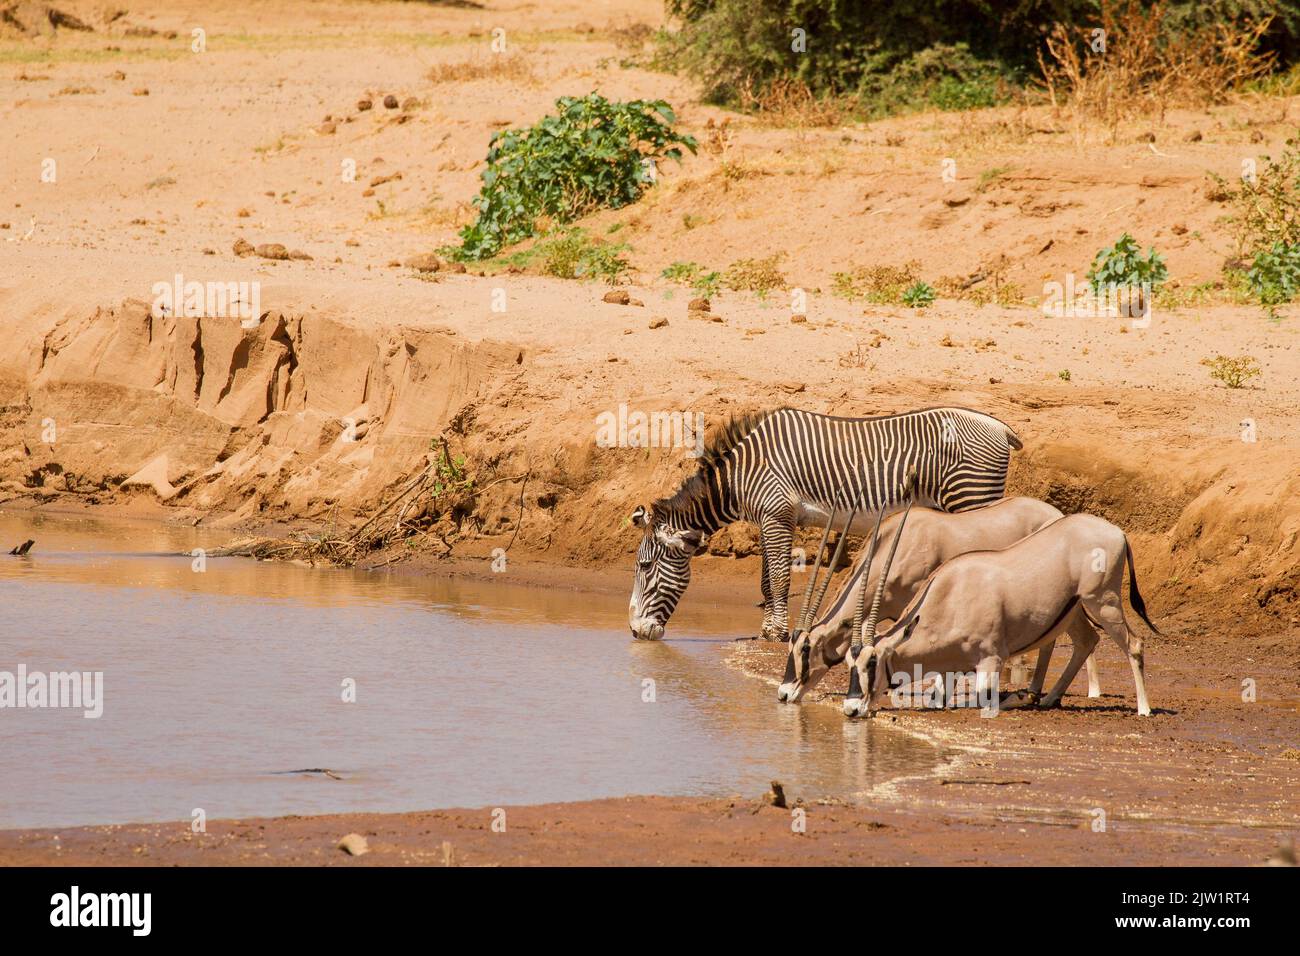 Africa orientale, o Beisa, Oryx (Oryx beisa) bere con zebra in un foro di irrigazione Foto Stock